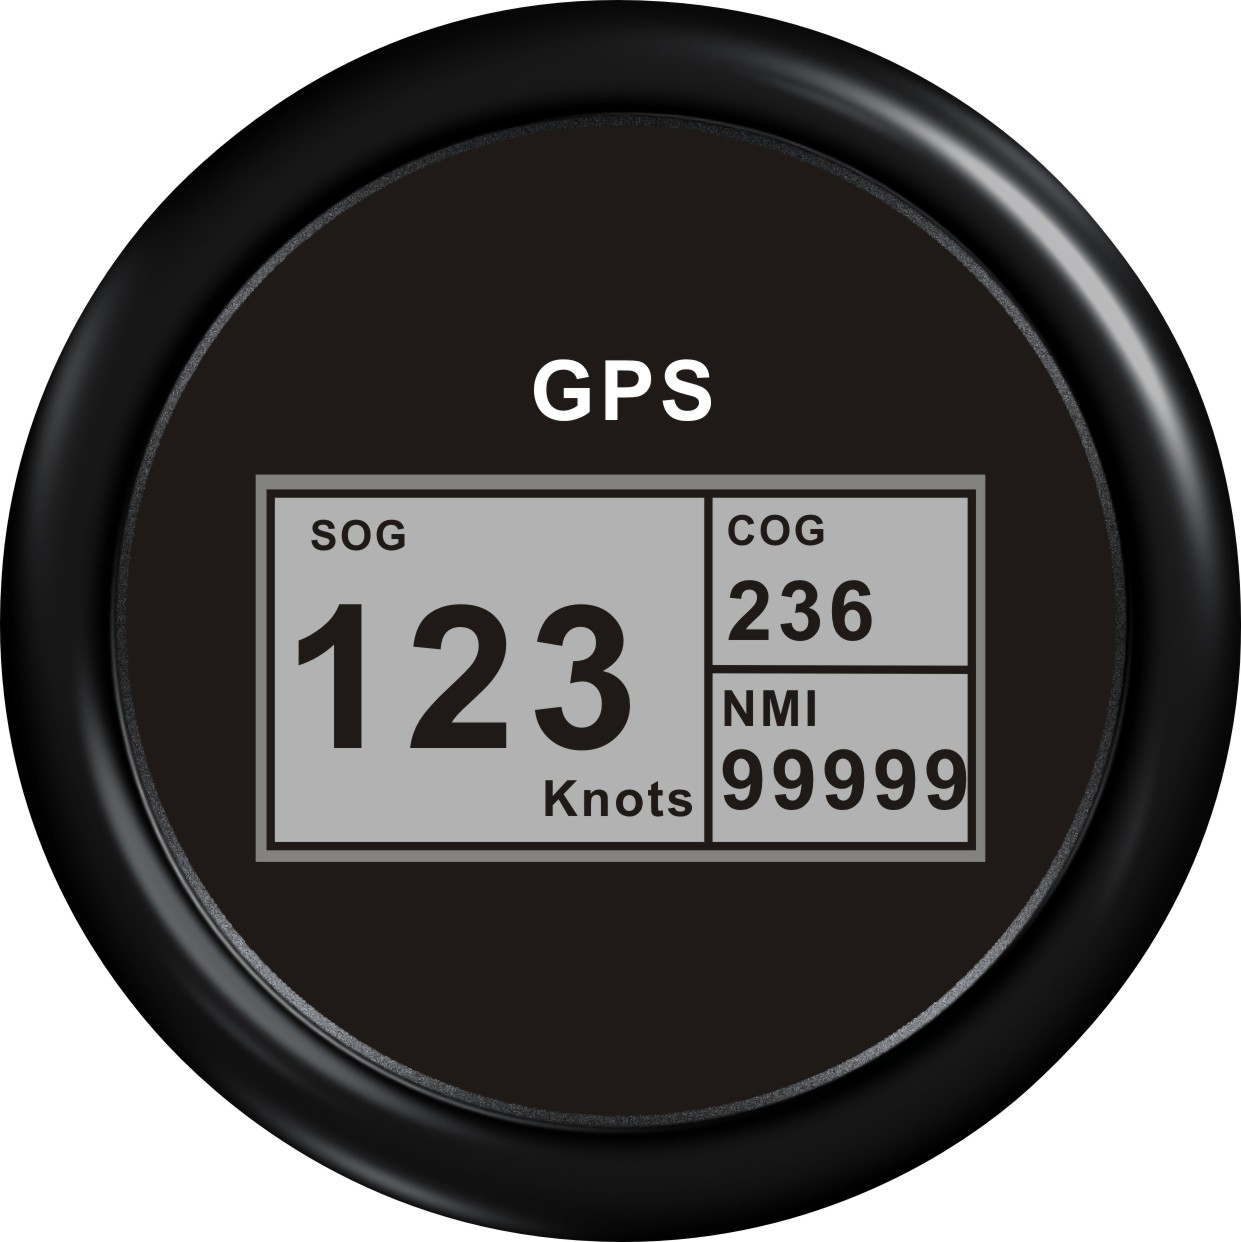 EBM DIGITAL GPS LOGG